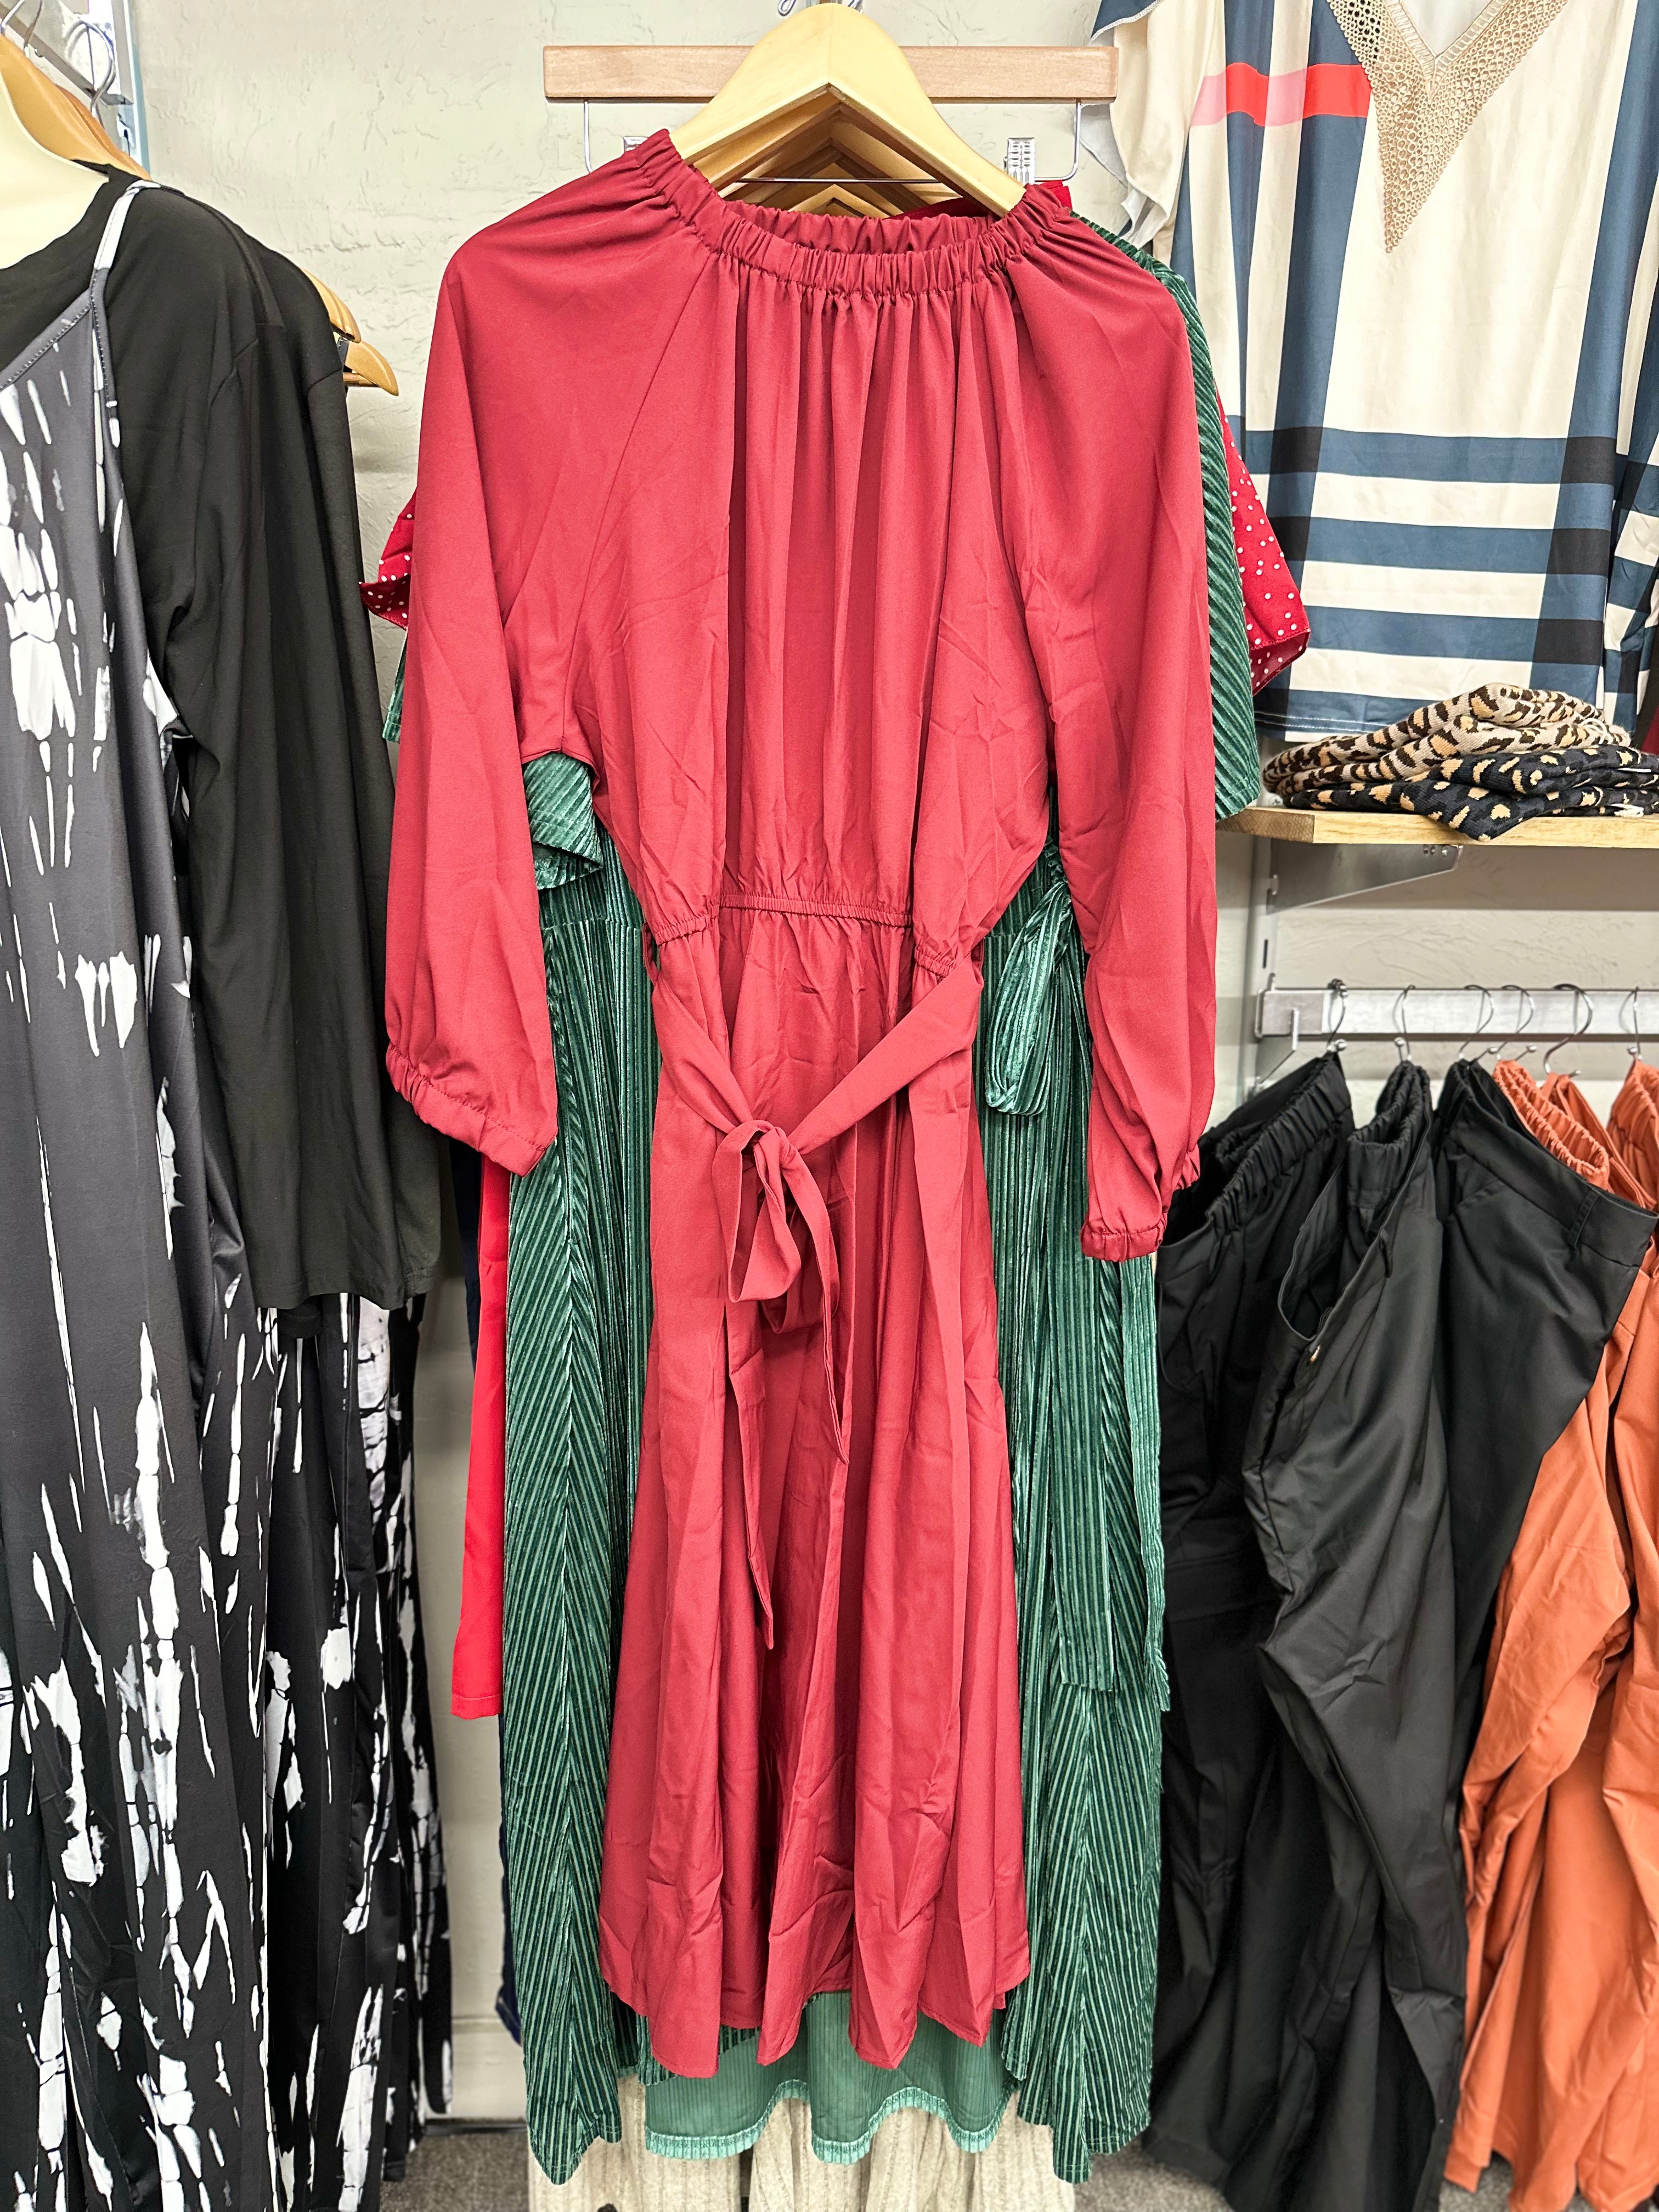 Curvy burgundy dress